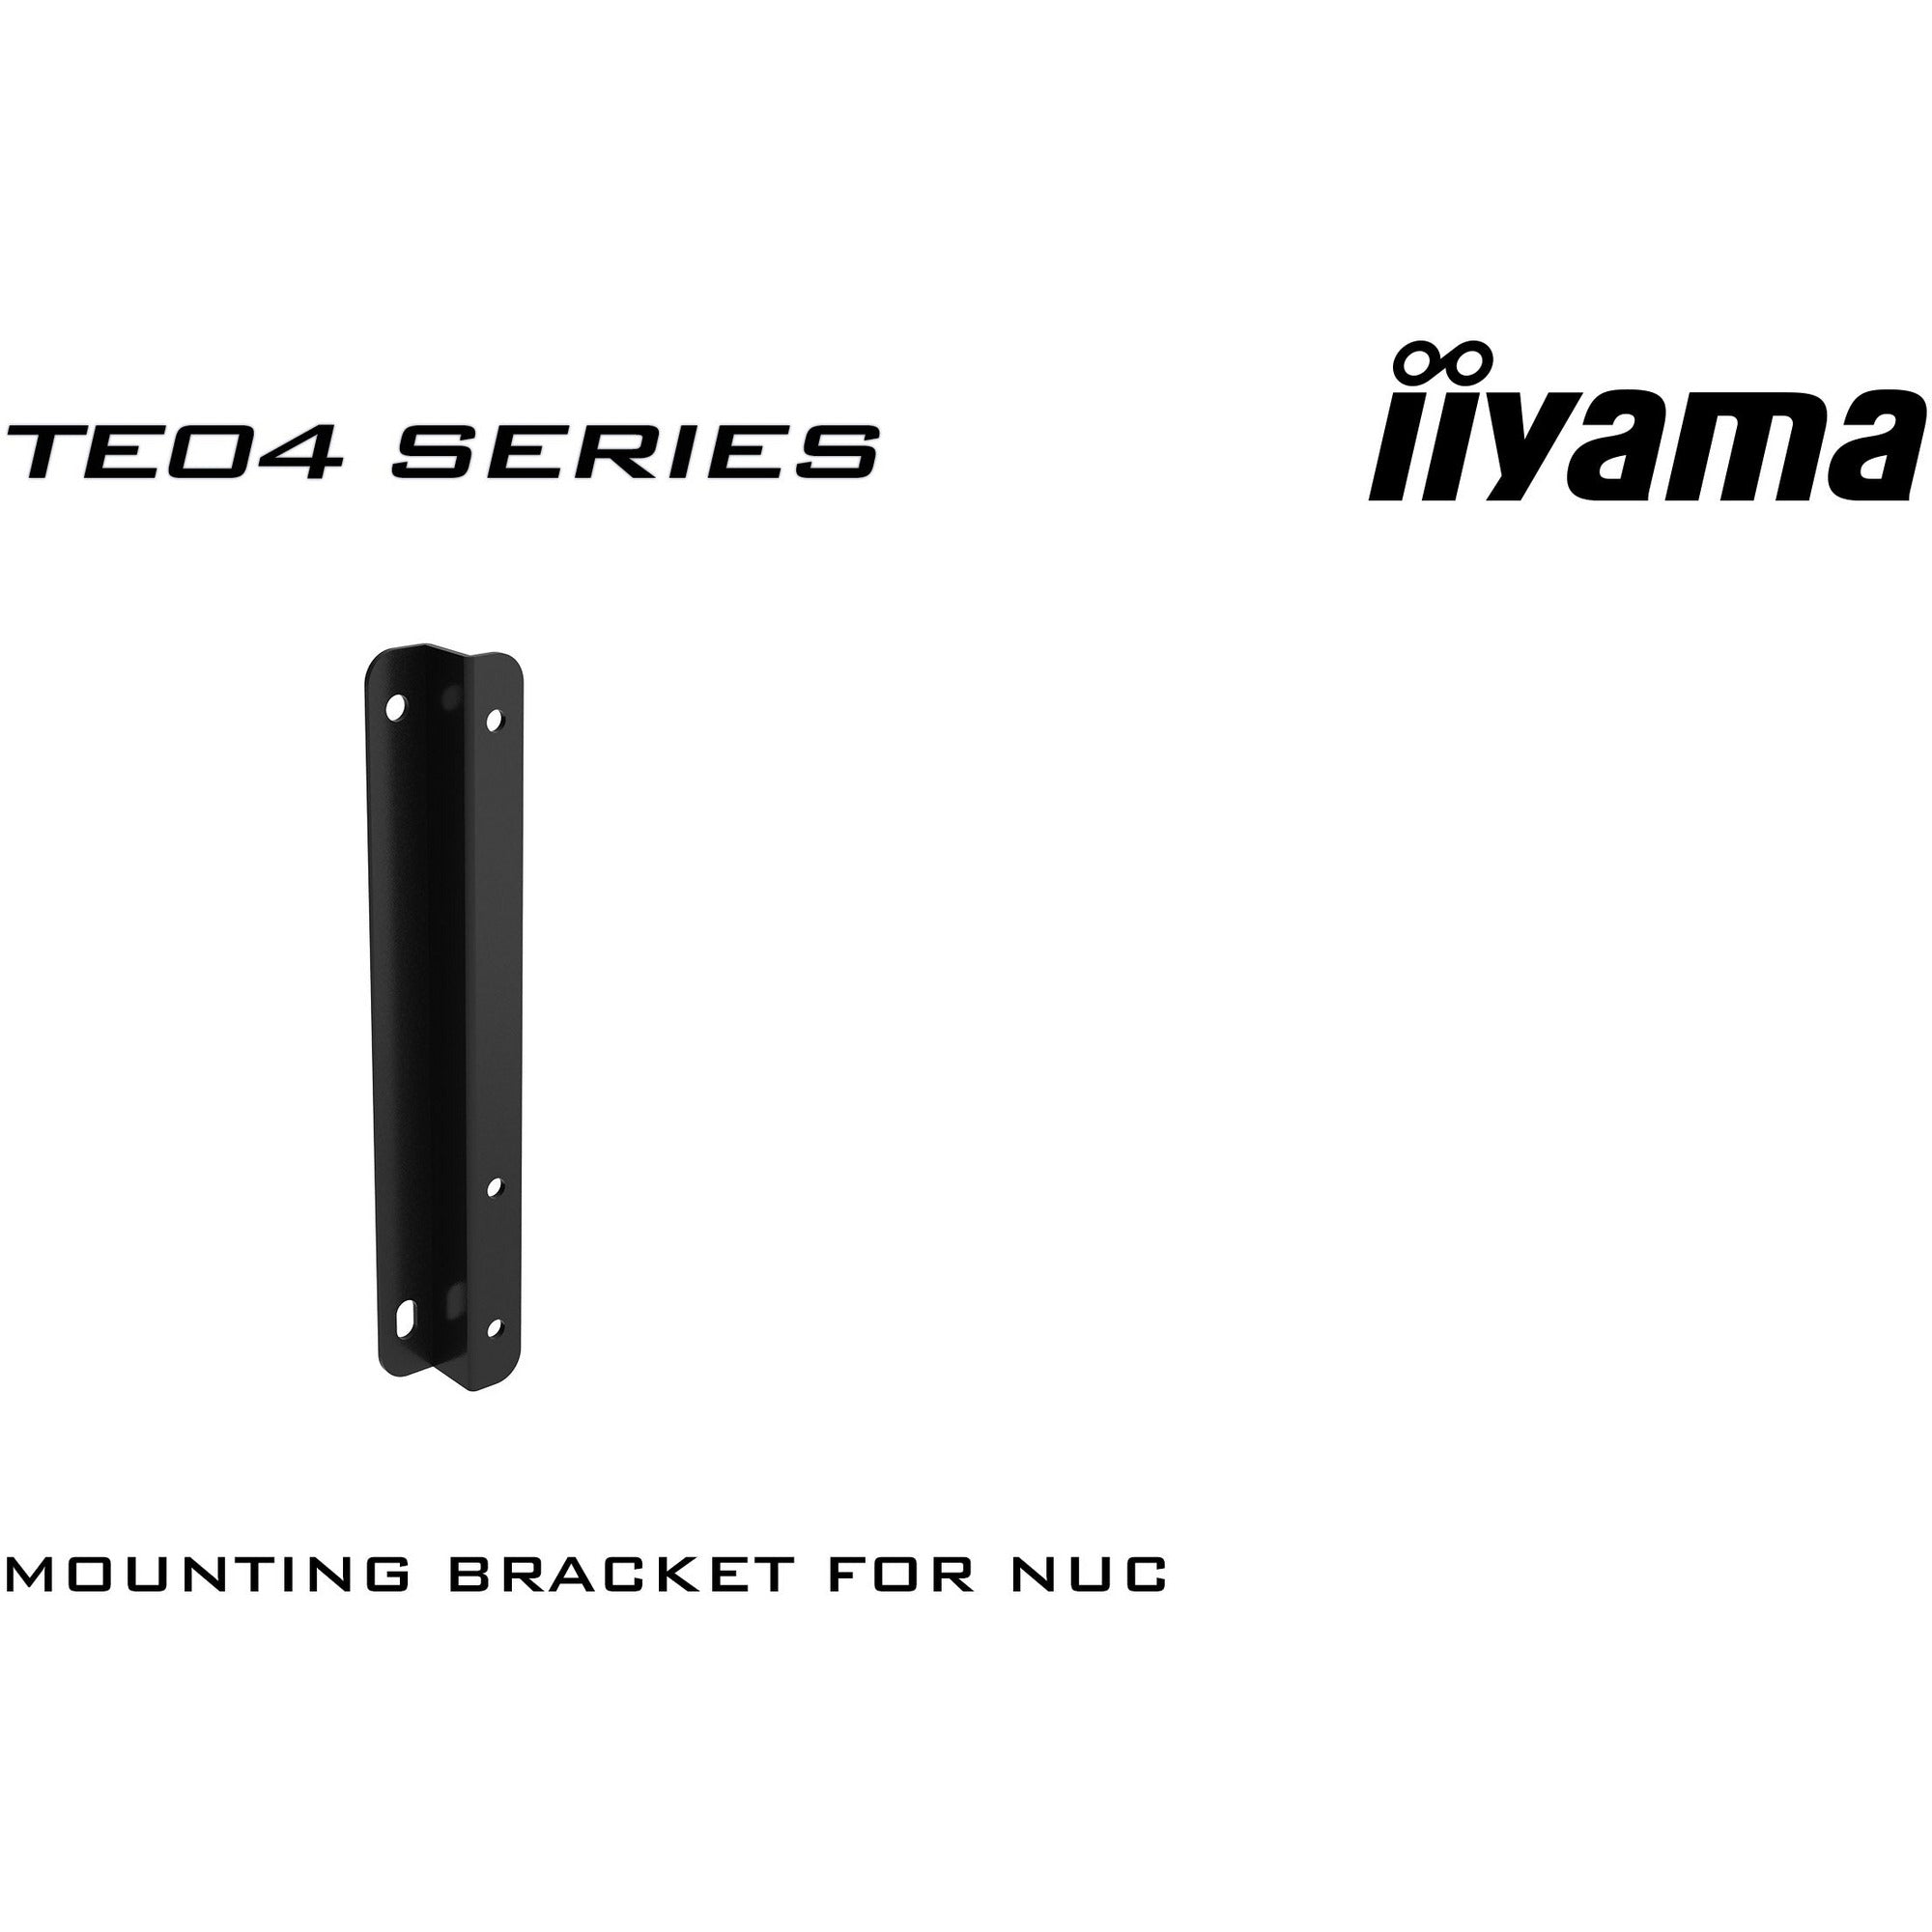 Iiyama ProLite TE7504MIS-B3AG 75" Interactive  4K UHD LCD Touchscreen with Whiteboard Software